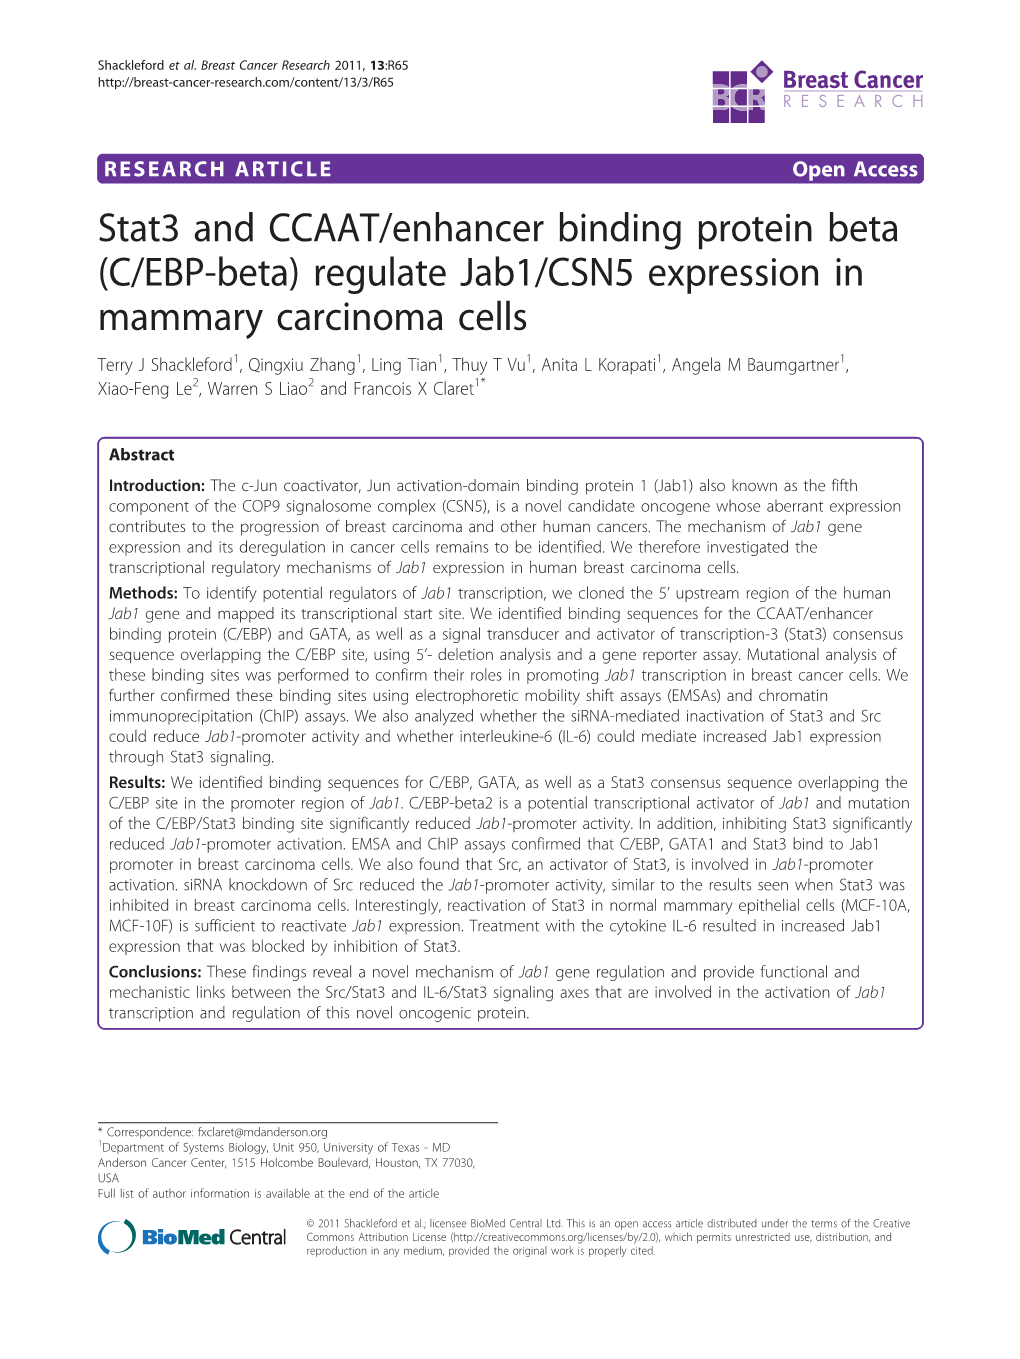 Stat3 and CCAAT/Enhancer Binding Protein Beta (C/EBP-Beta) Regulate